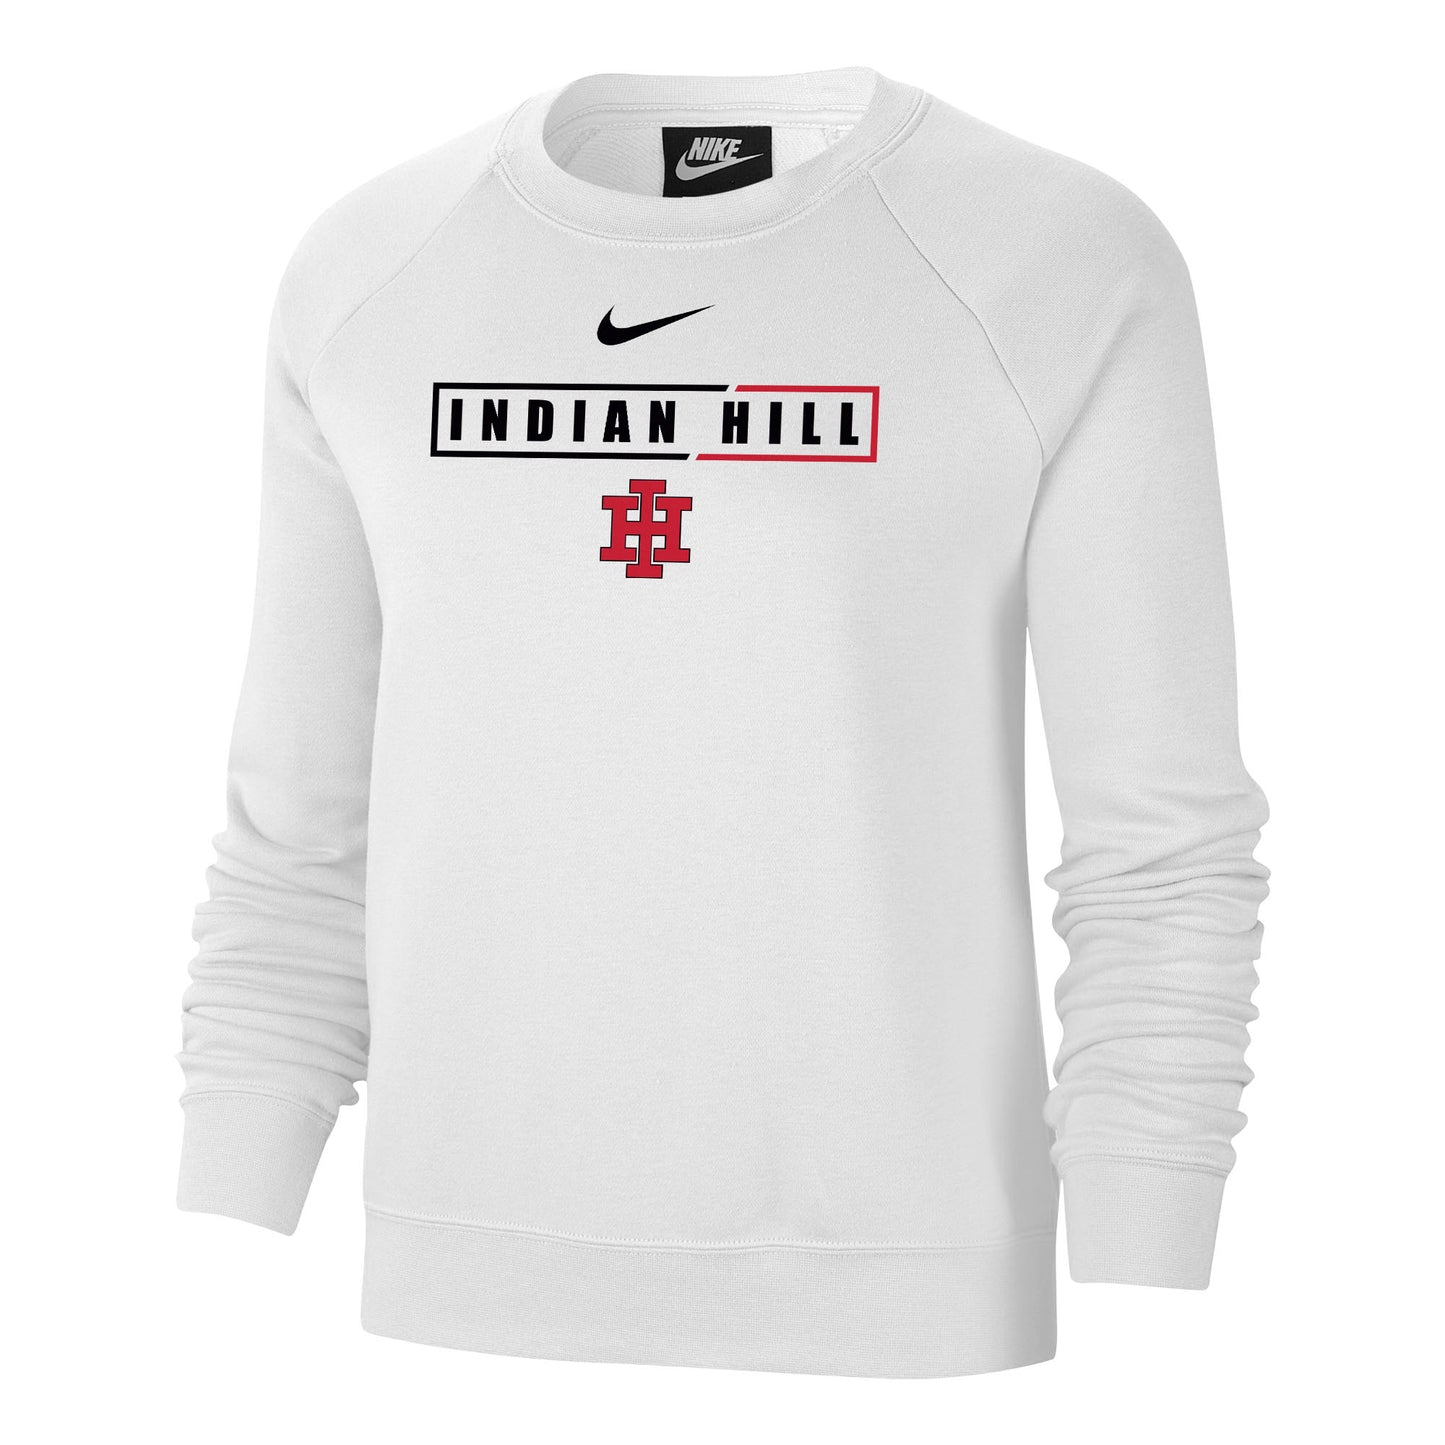 Nike Women's Varsity Fleece Crew - White by